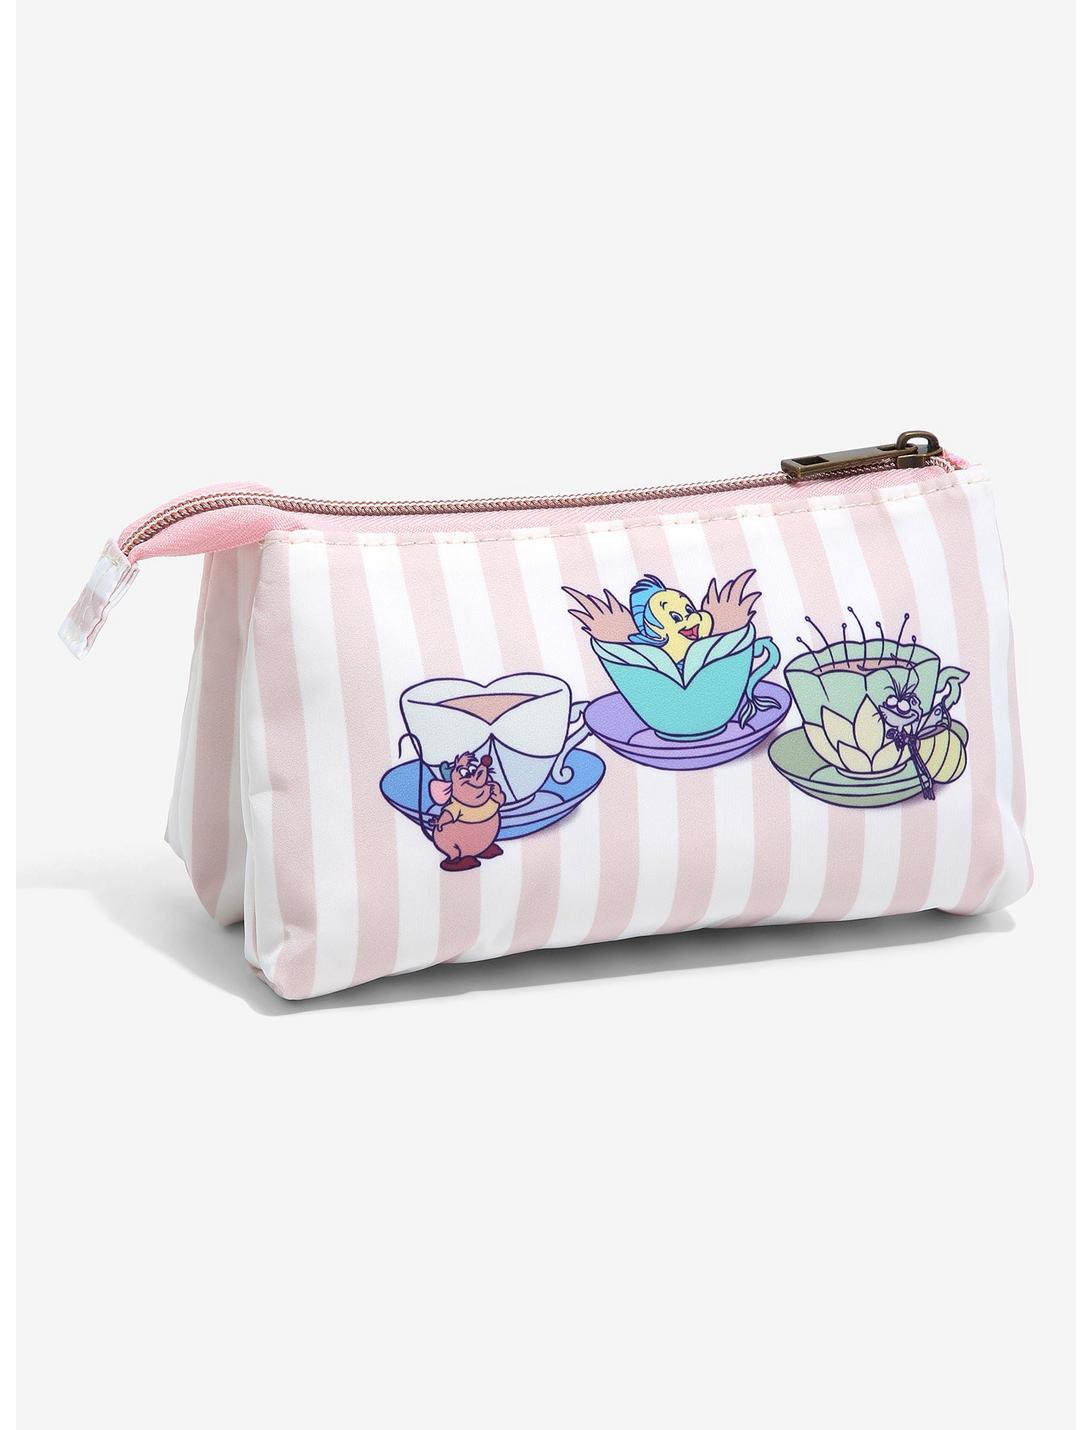 Disney Princess Pets & Teacups Cosmetic Bag - BoxLunch Exclusive, , hi-res